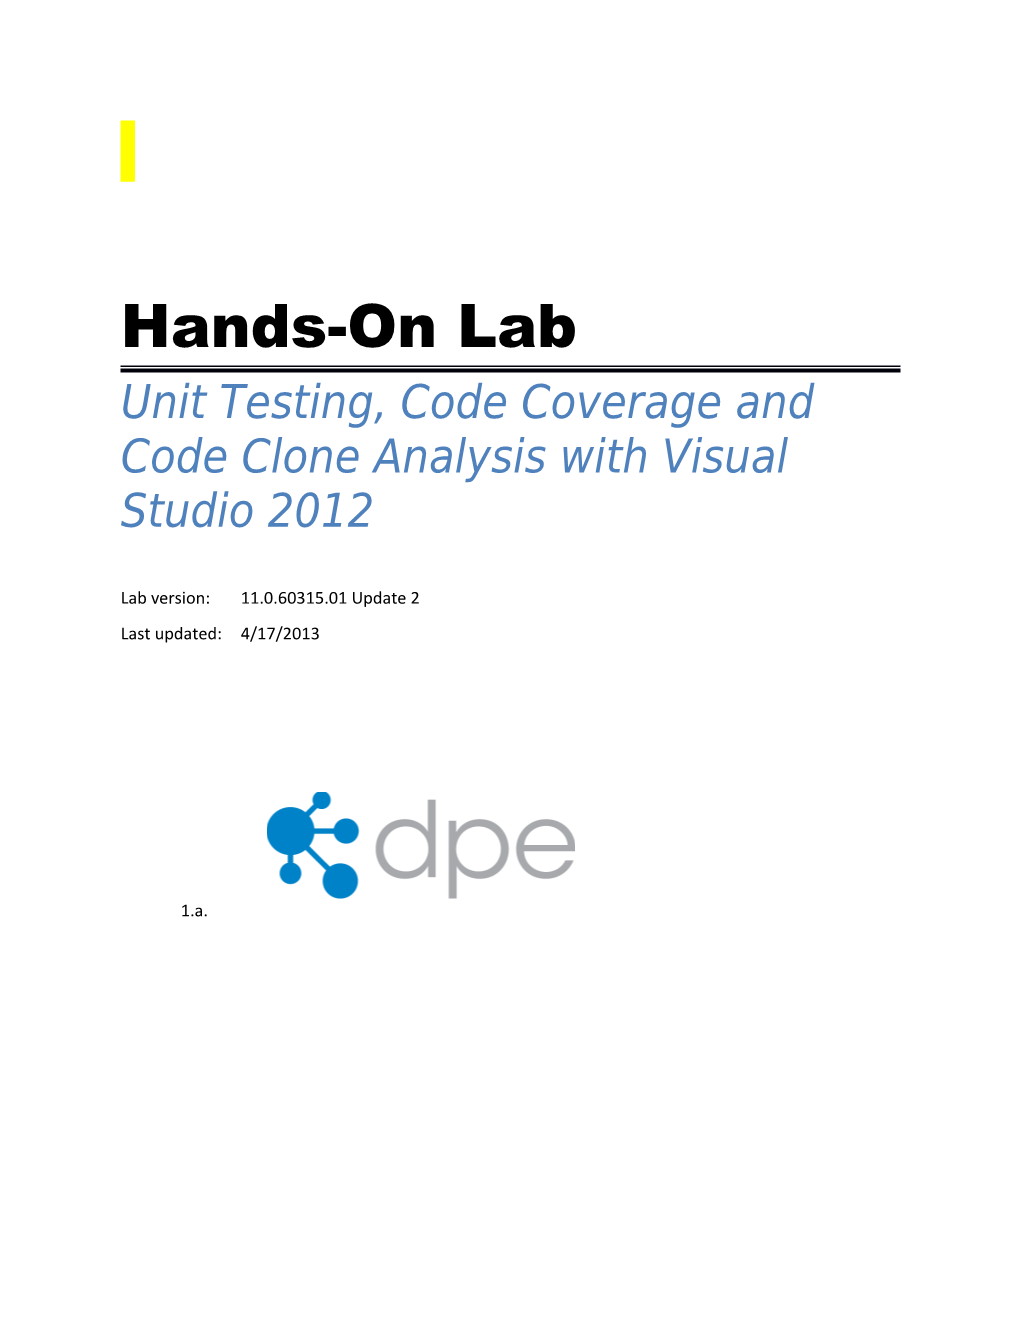 Unit Testing, Code Coverageand Code Clone Analysis with Visual Studio 2012